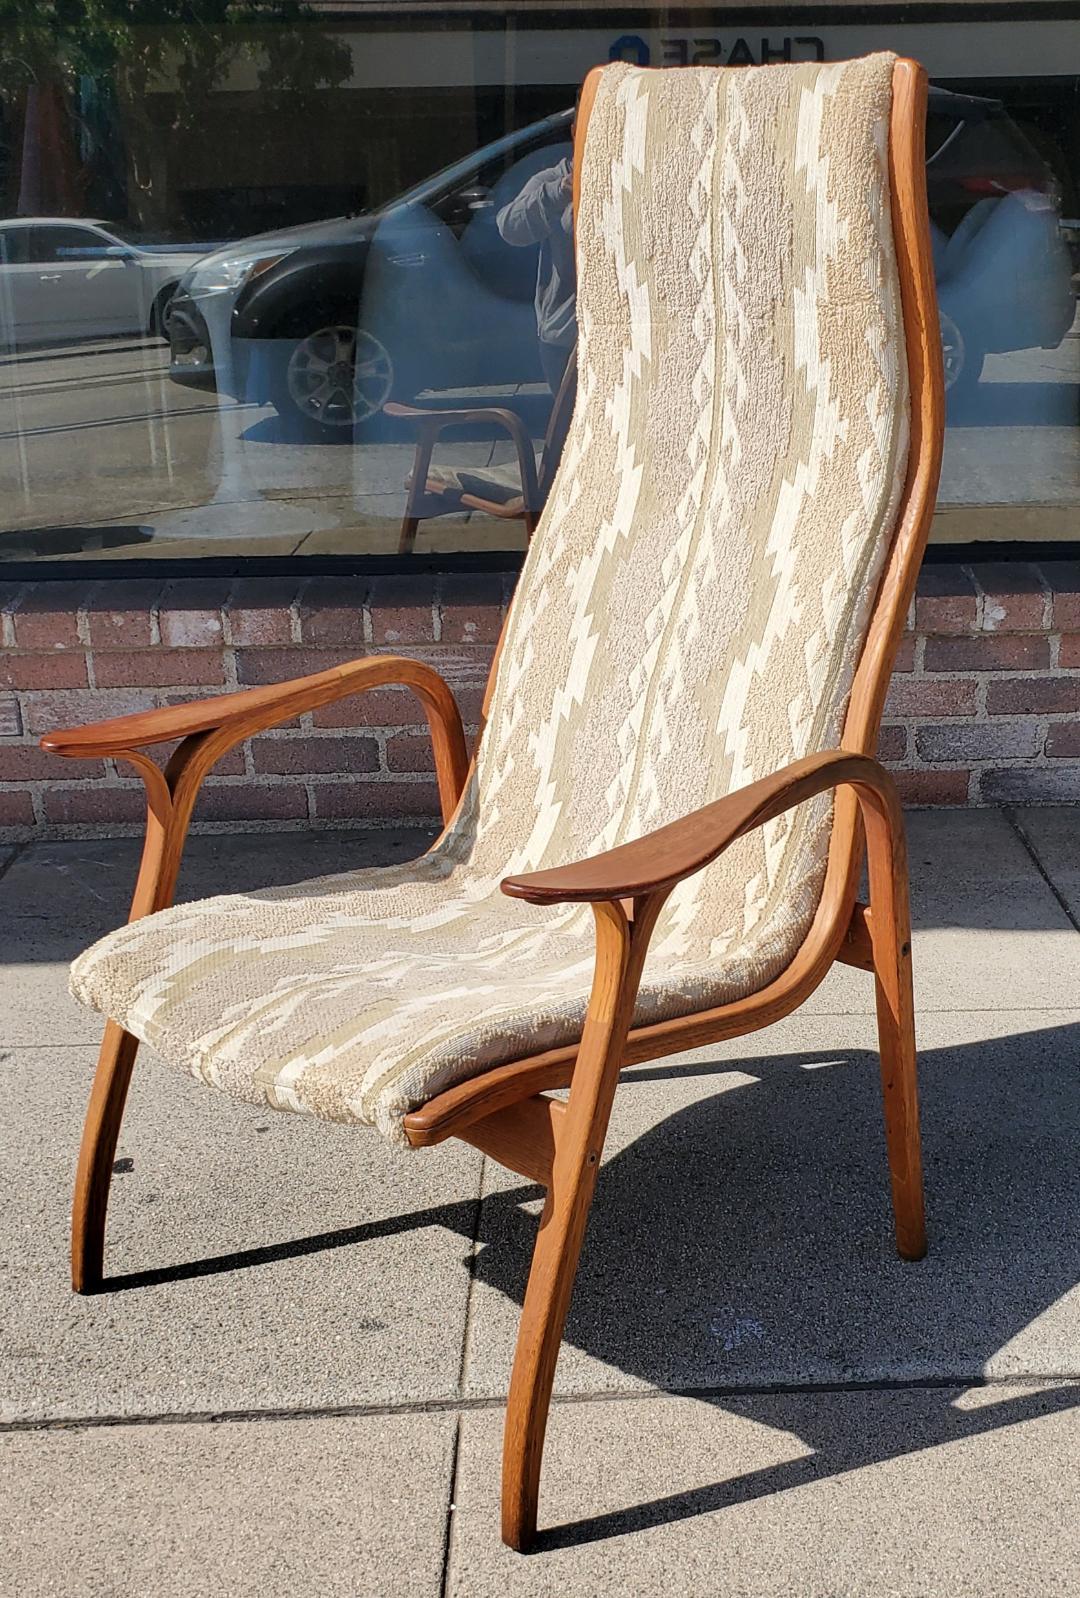 1960er Jahre Yngve Ekström Lamino Stuhl für Swedese Scandinavian Modern Design ist gestempelt, Made in Sweden.

Ein skandinavisch-modernes Design der 1960er Jahre von Yngve Ekstrom ist ein bequemer Lounge-/Sessel. Der 